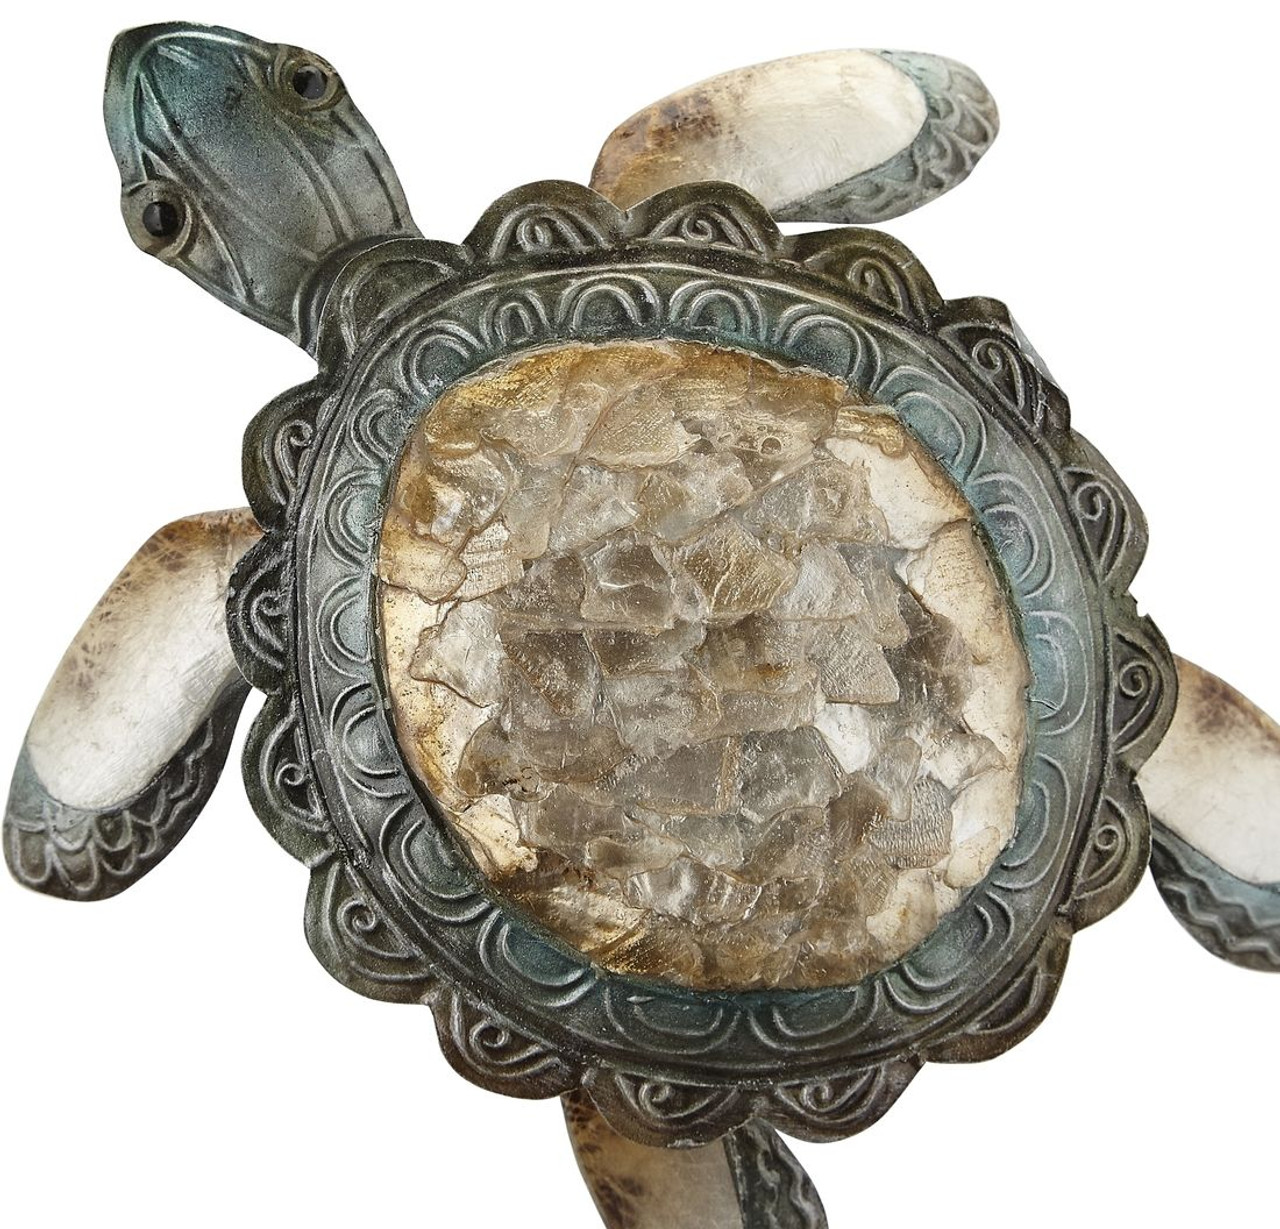  Ruffled Turtle on Stand - Rustic - 11" x 8" - Metal & Capiz Art - Closeup